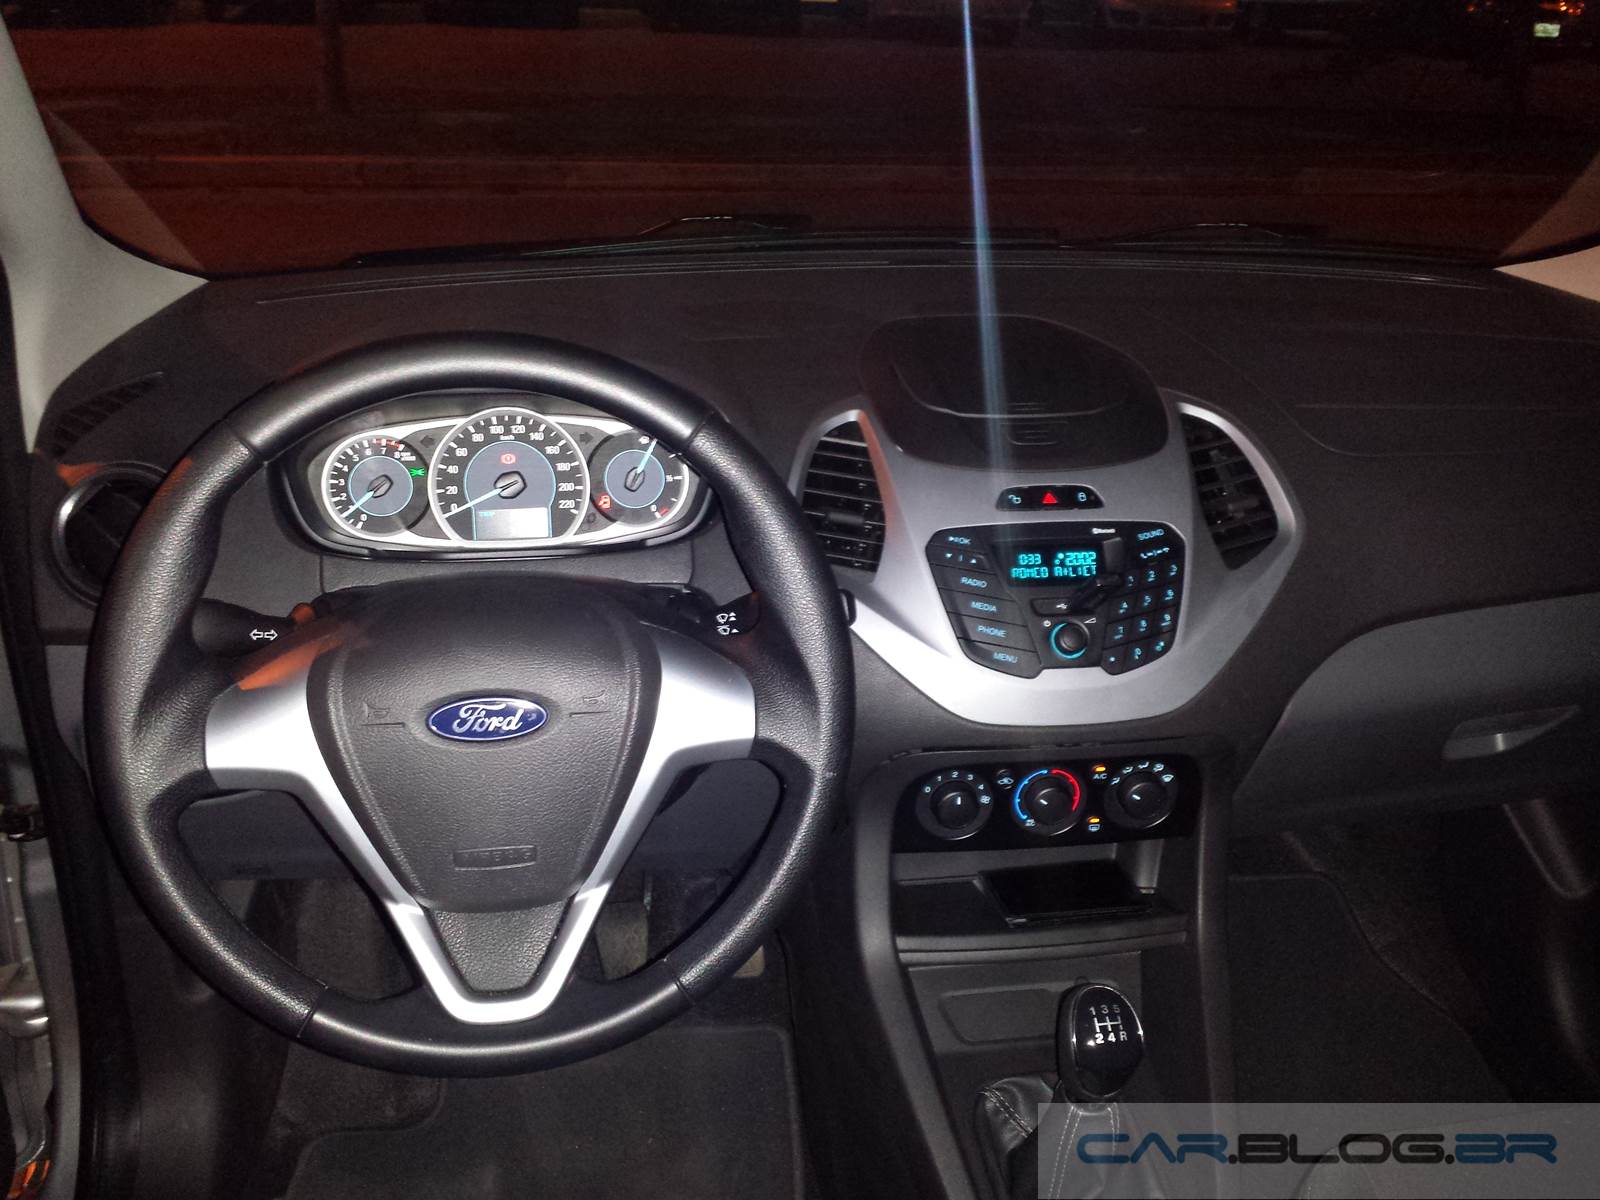 Ford Ka SE 1.0 2016 - interior - painel